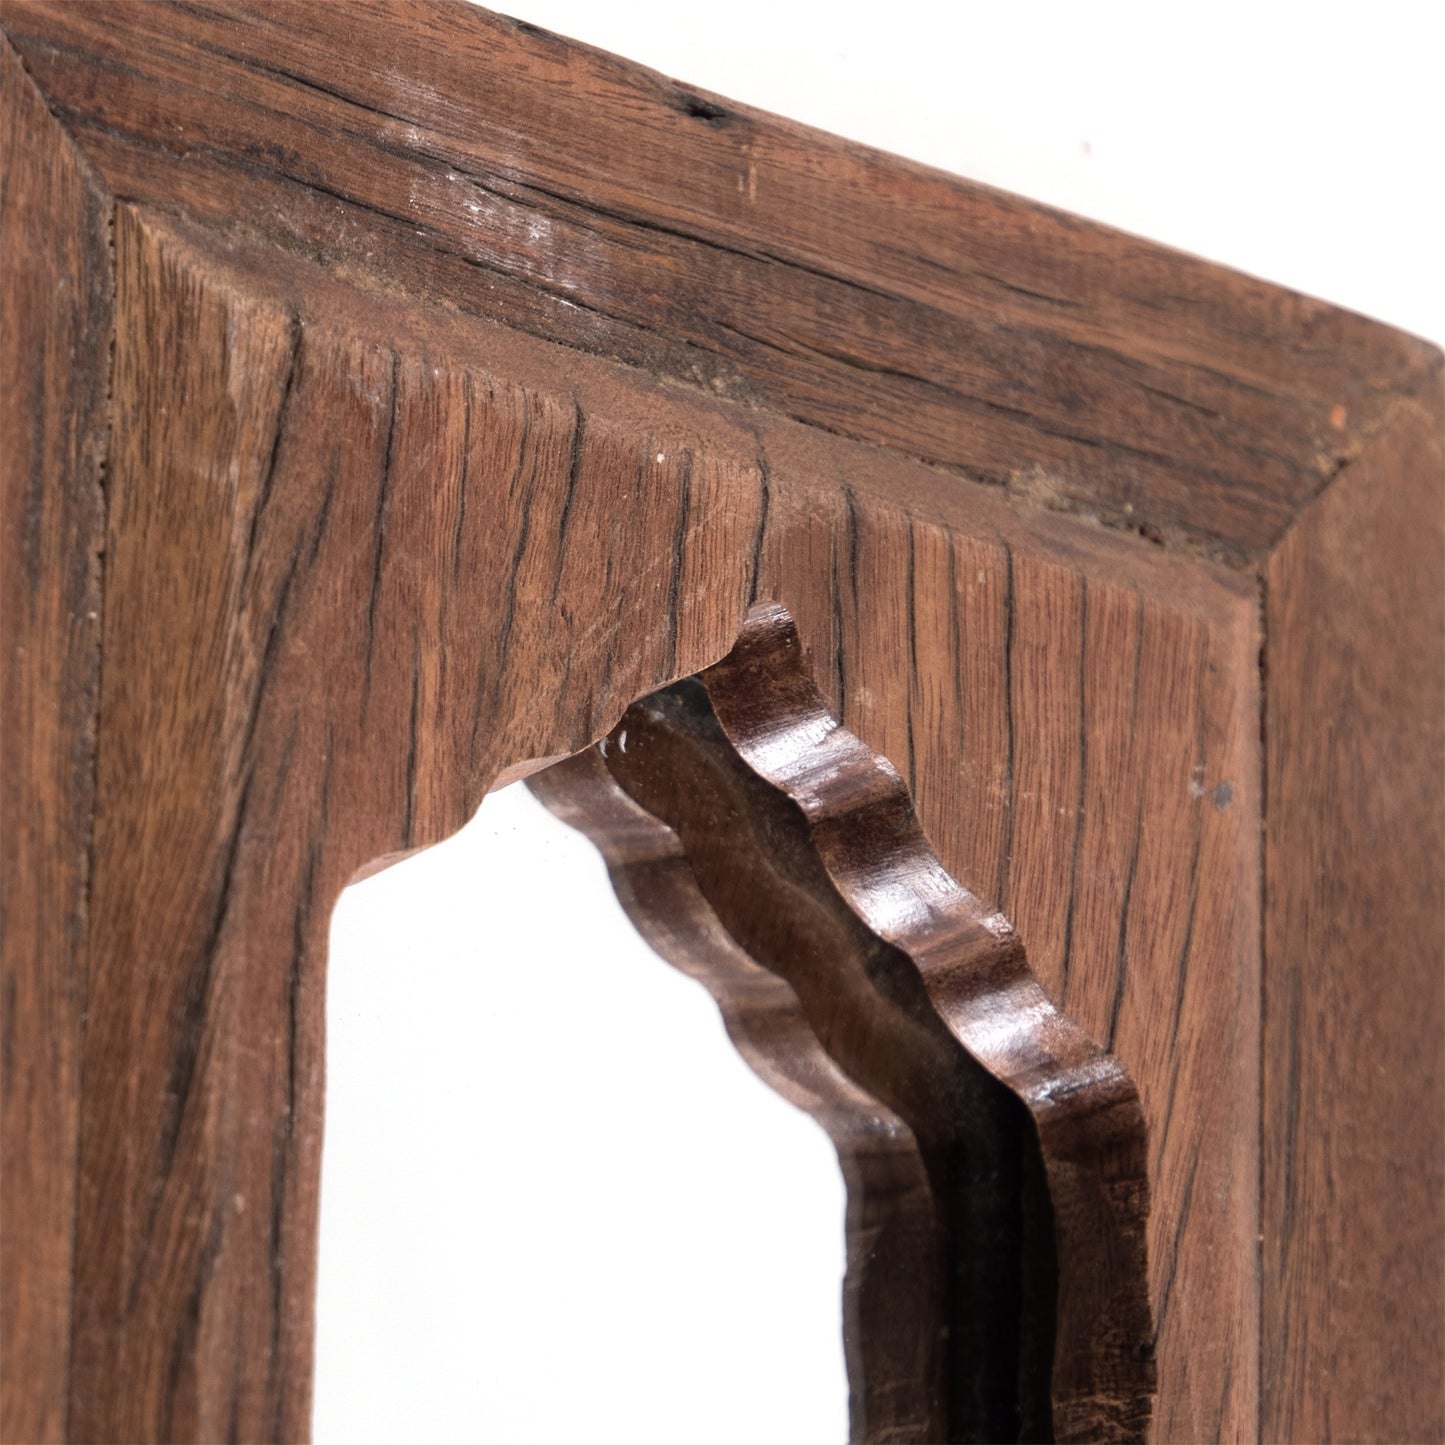 WANDSPIEGEL "SARA" | Mahagoni, 40 cm | Orient Holzspiegel